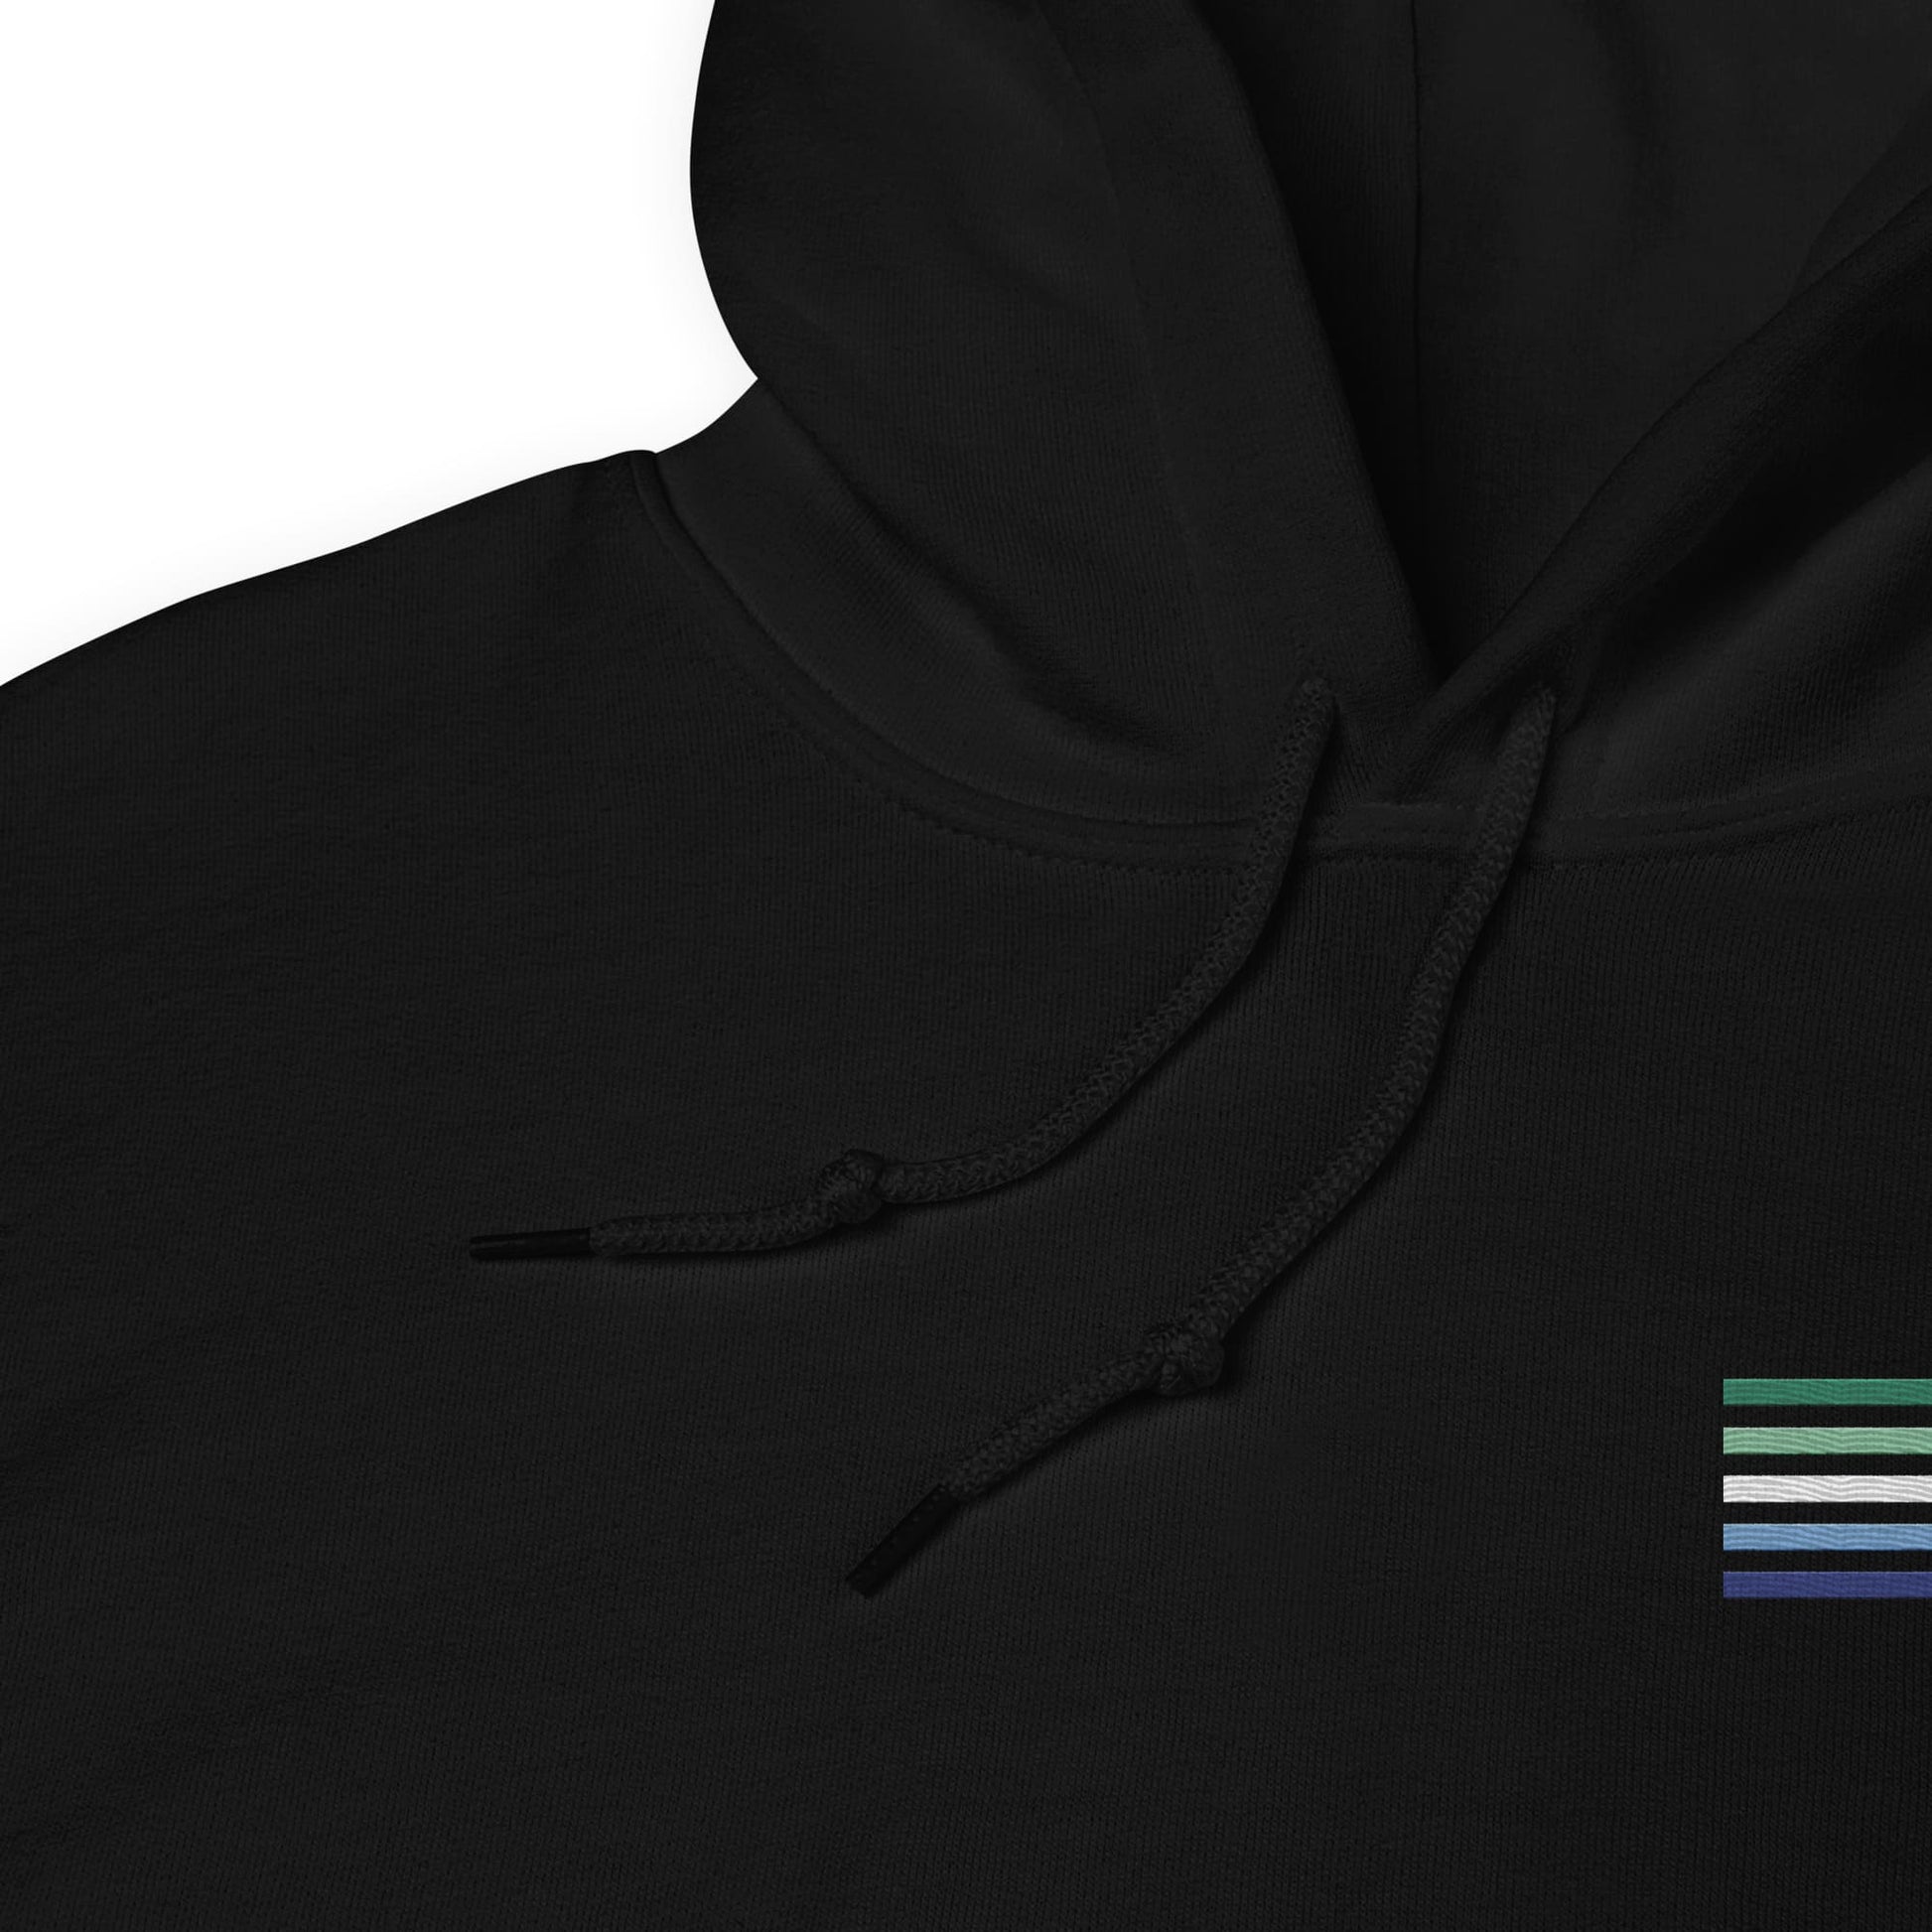 gay mlm hoodie, subtle vincian flag embroidered pocket design hooded sweatshirt, strings